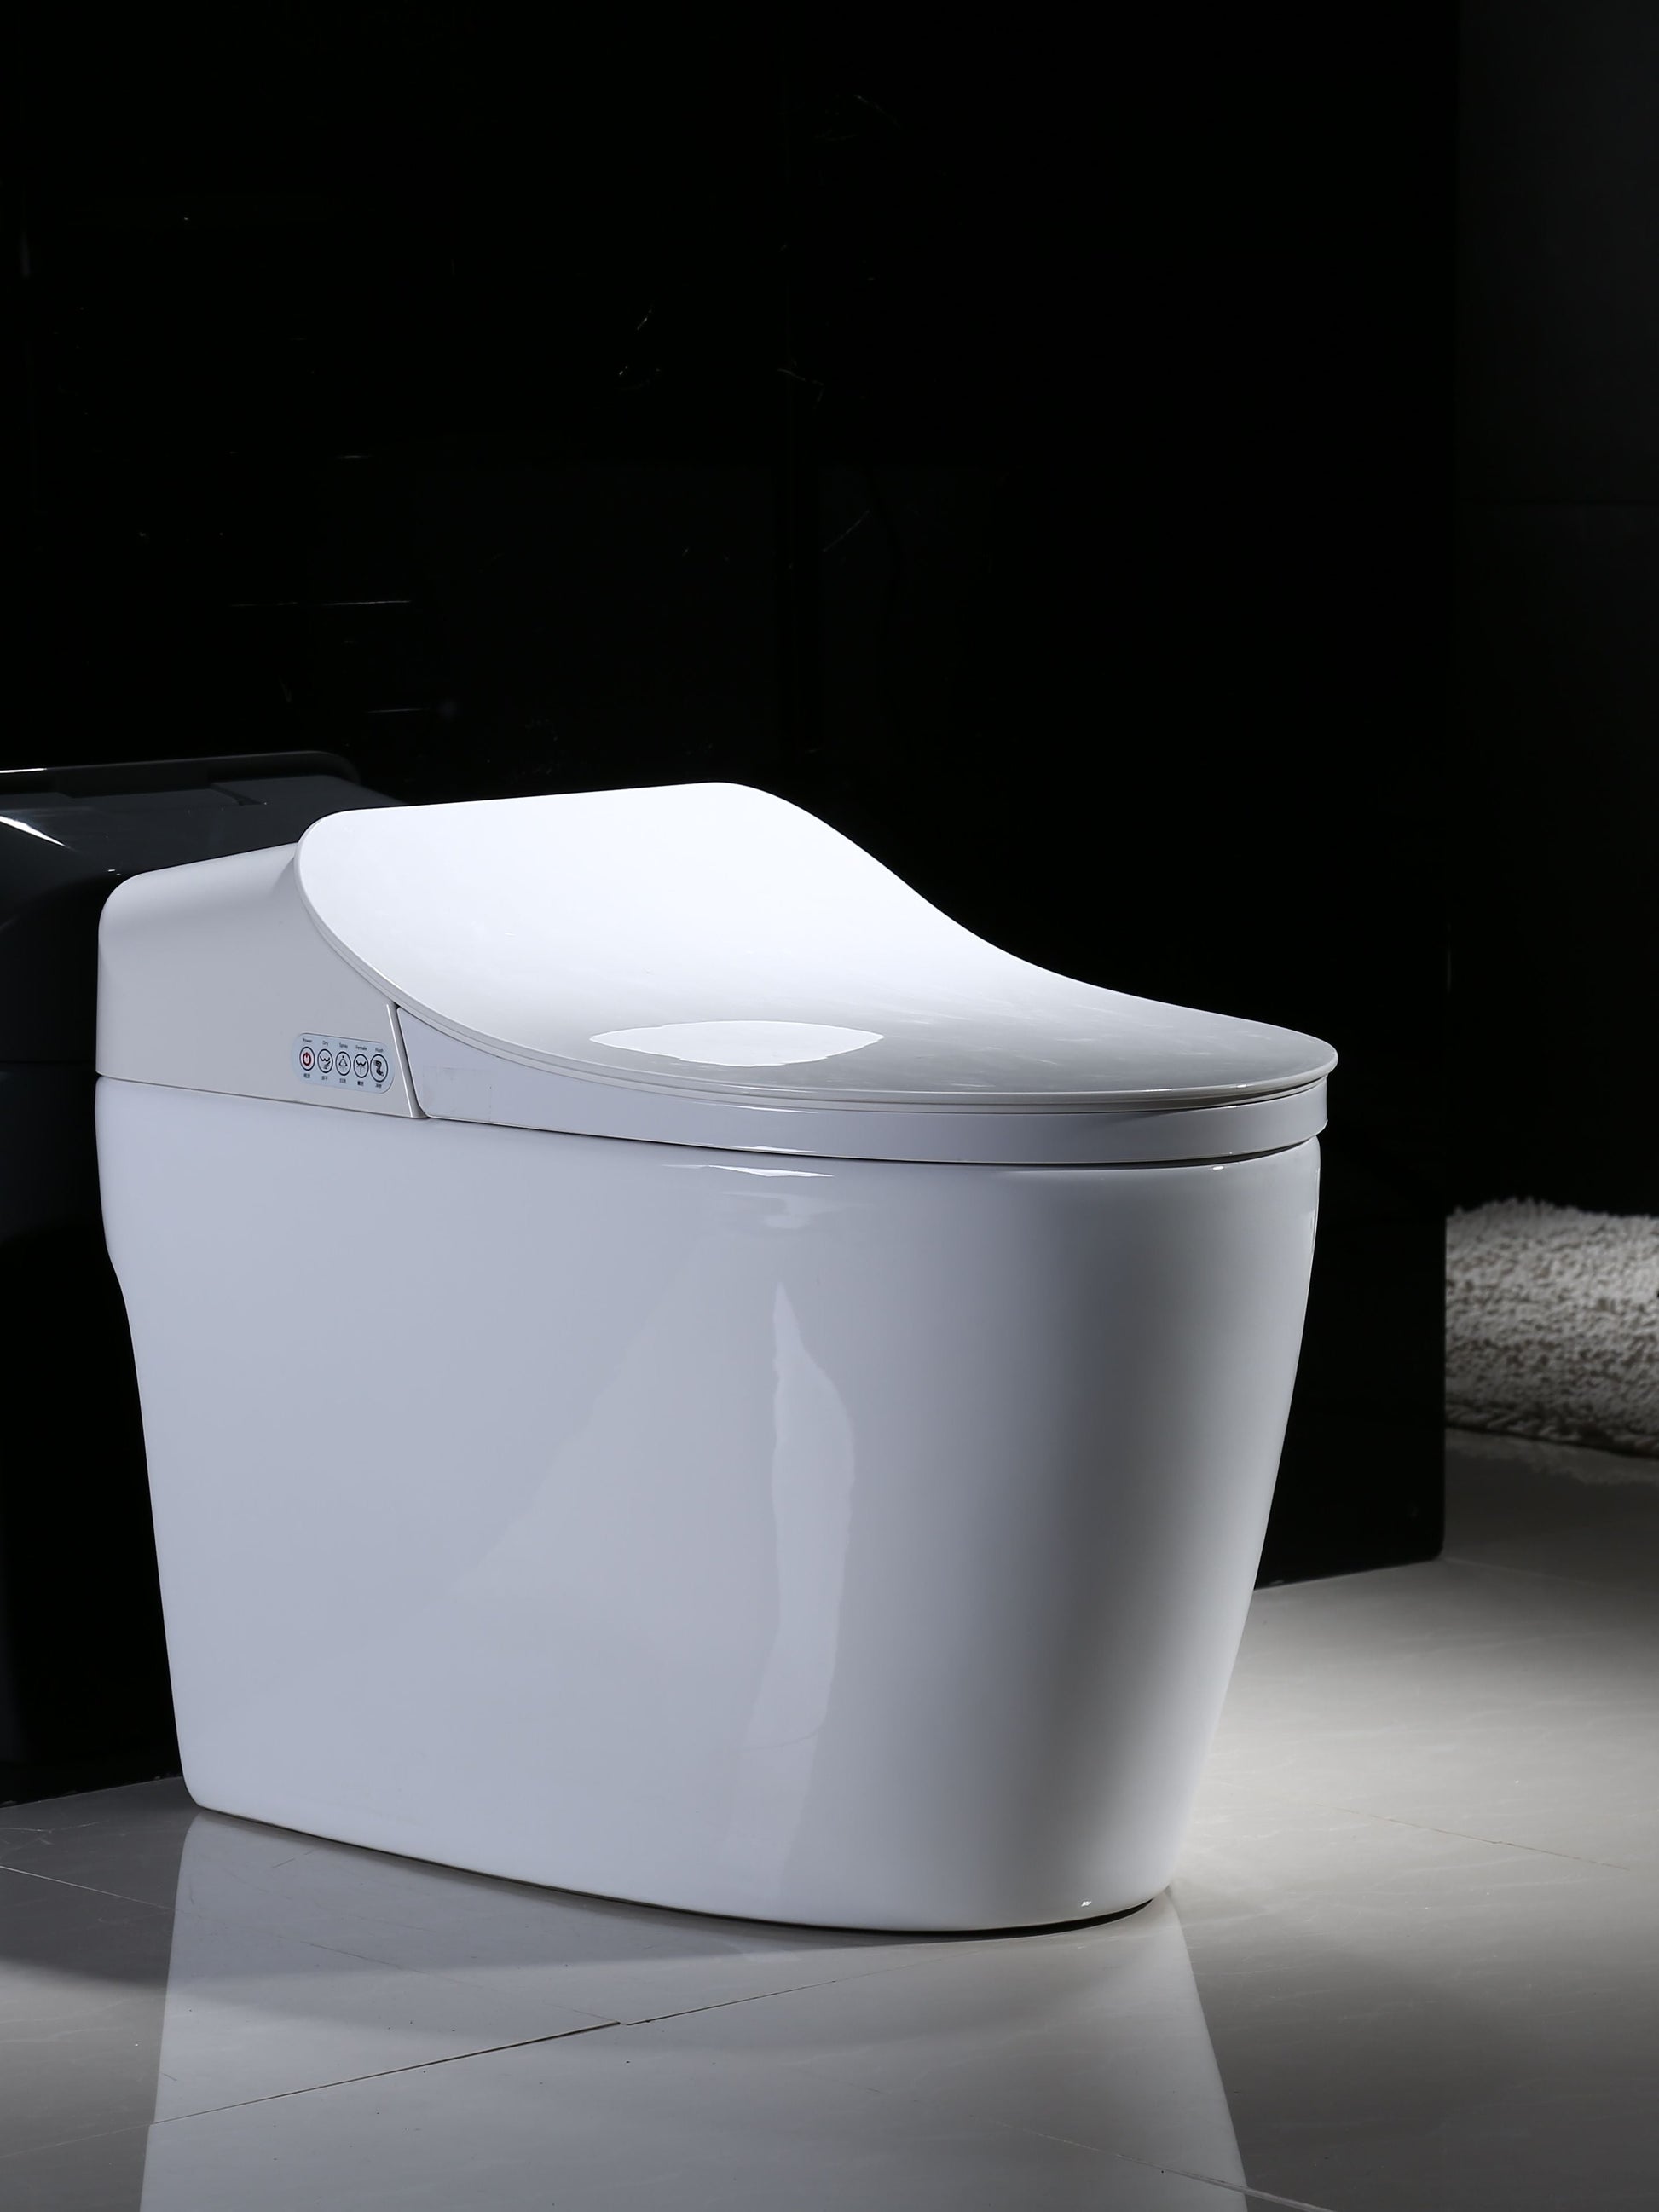 Bathroom Toilet S-trap Ptrap Intelligent WC Elongated Remote Controlled Smart Bidet Toilette